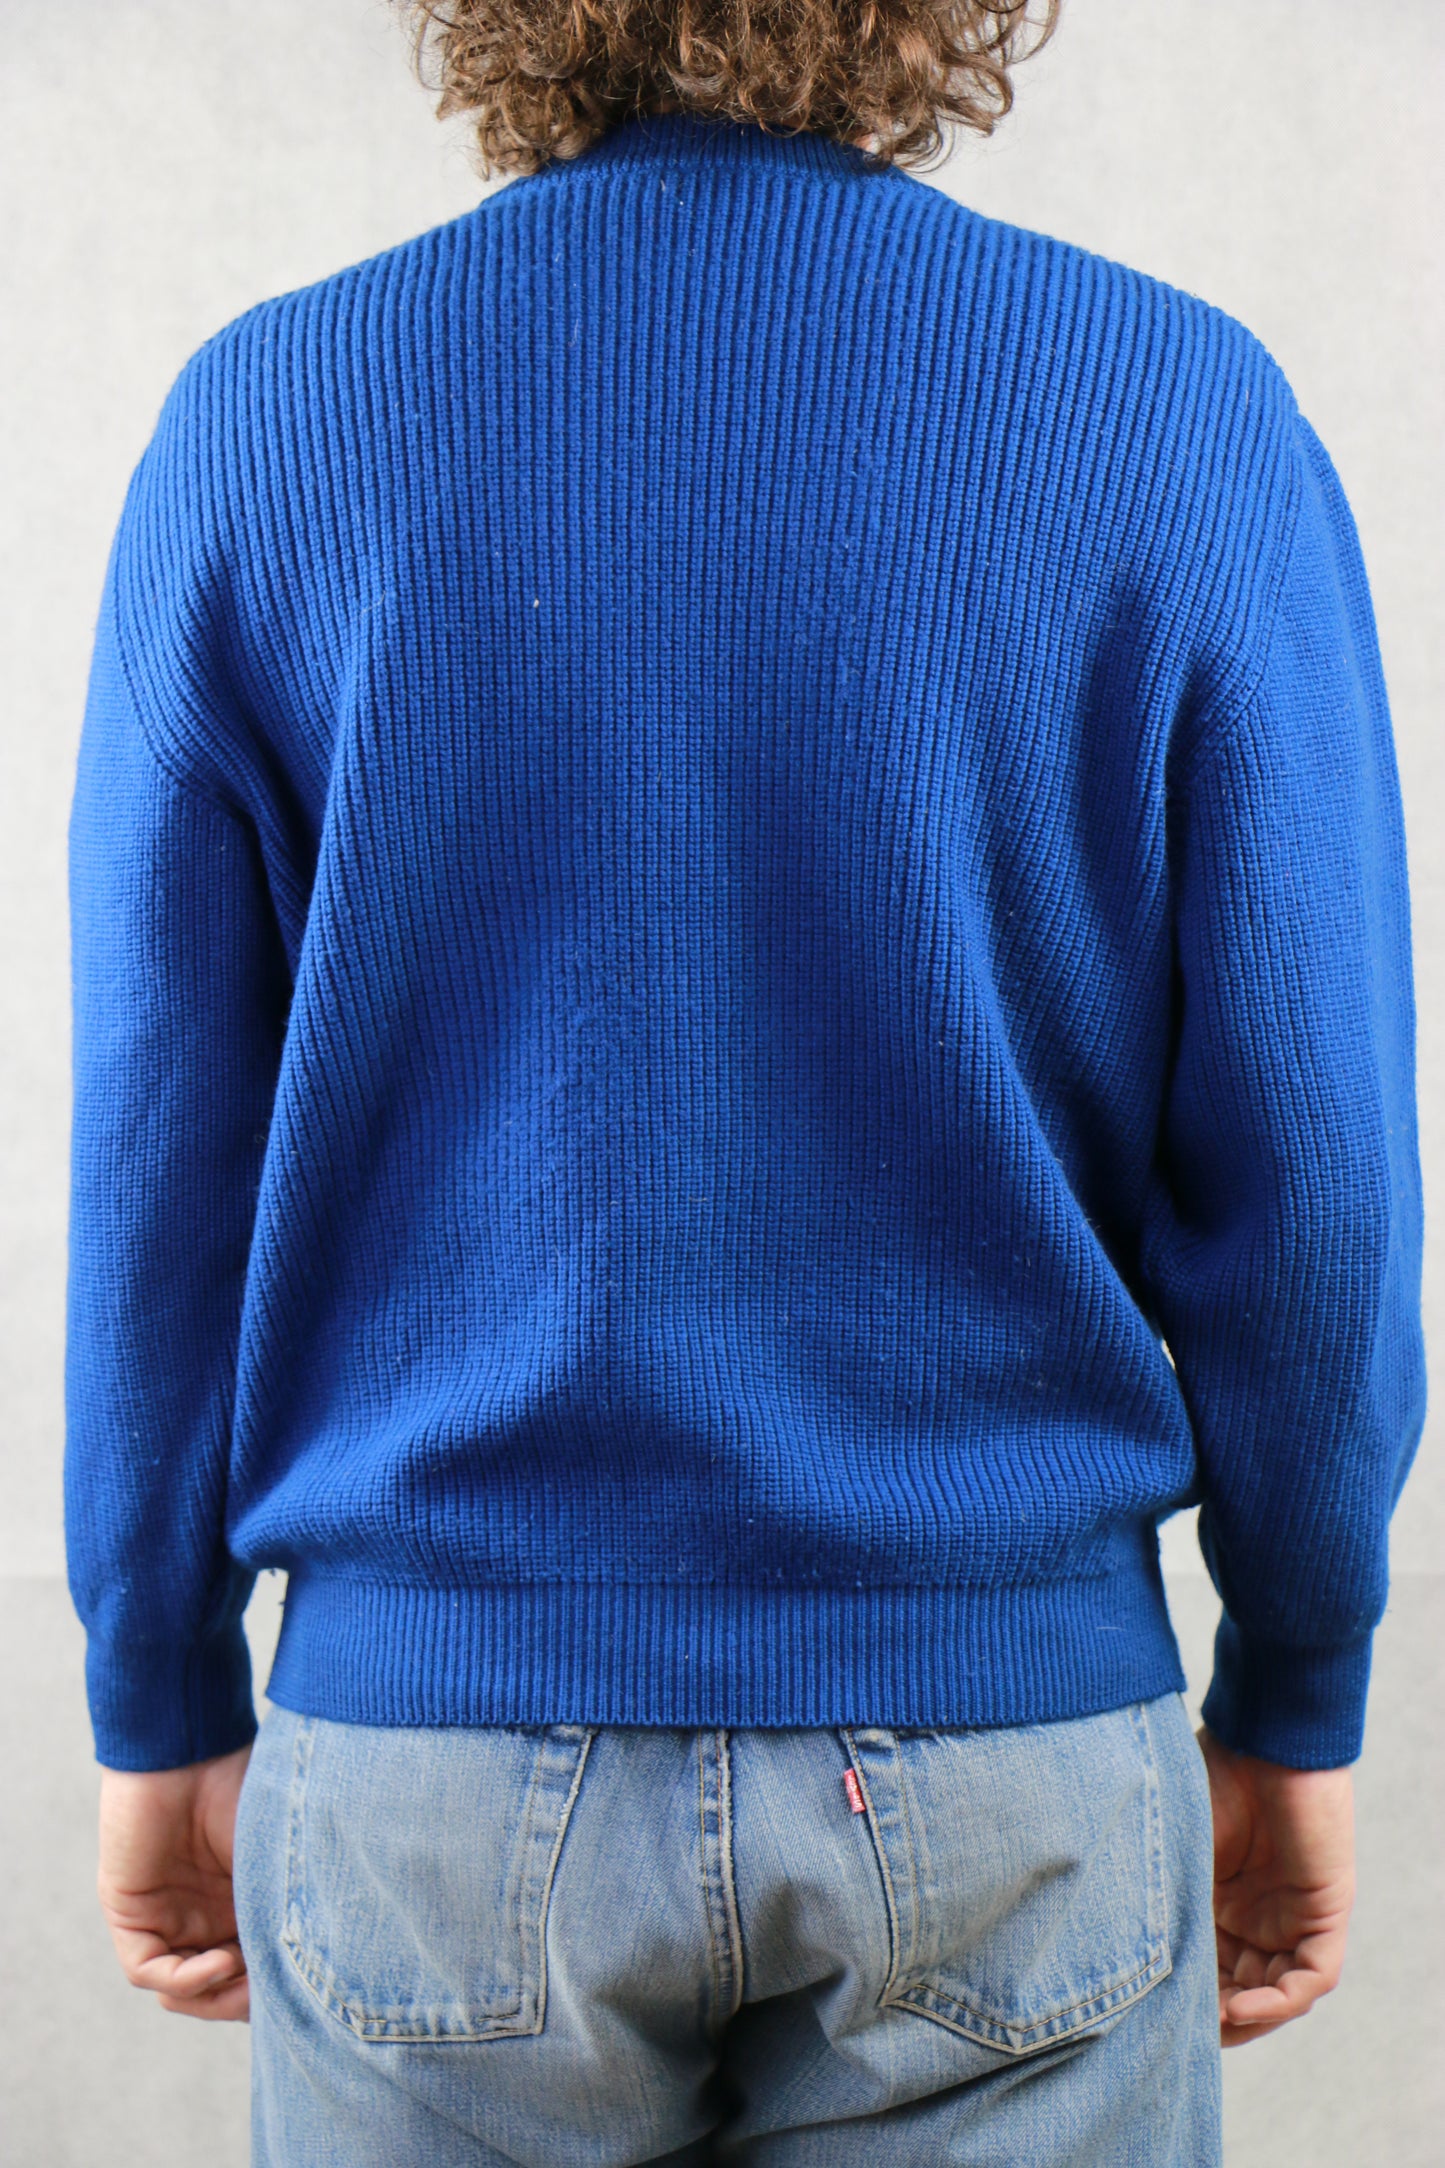 Valentino Sweater, vintage store clochard92.com